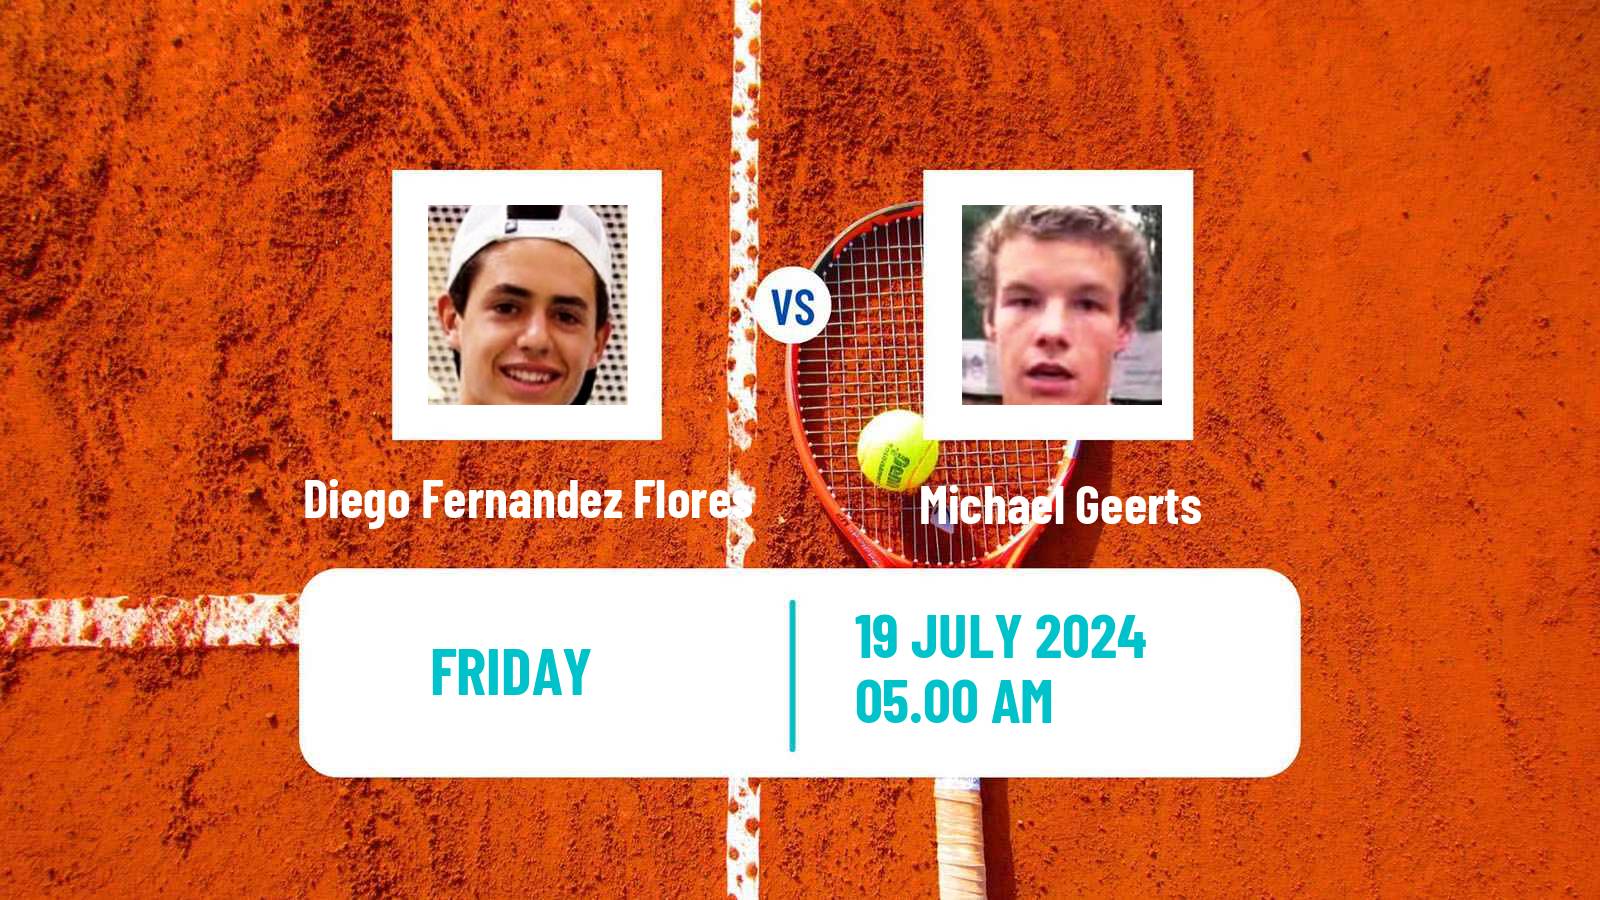 Tennis ITF M25 Castelo Branco Men Diego Fernandez Flores - Michael Geerts